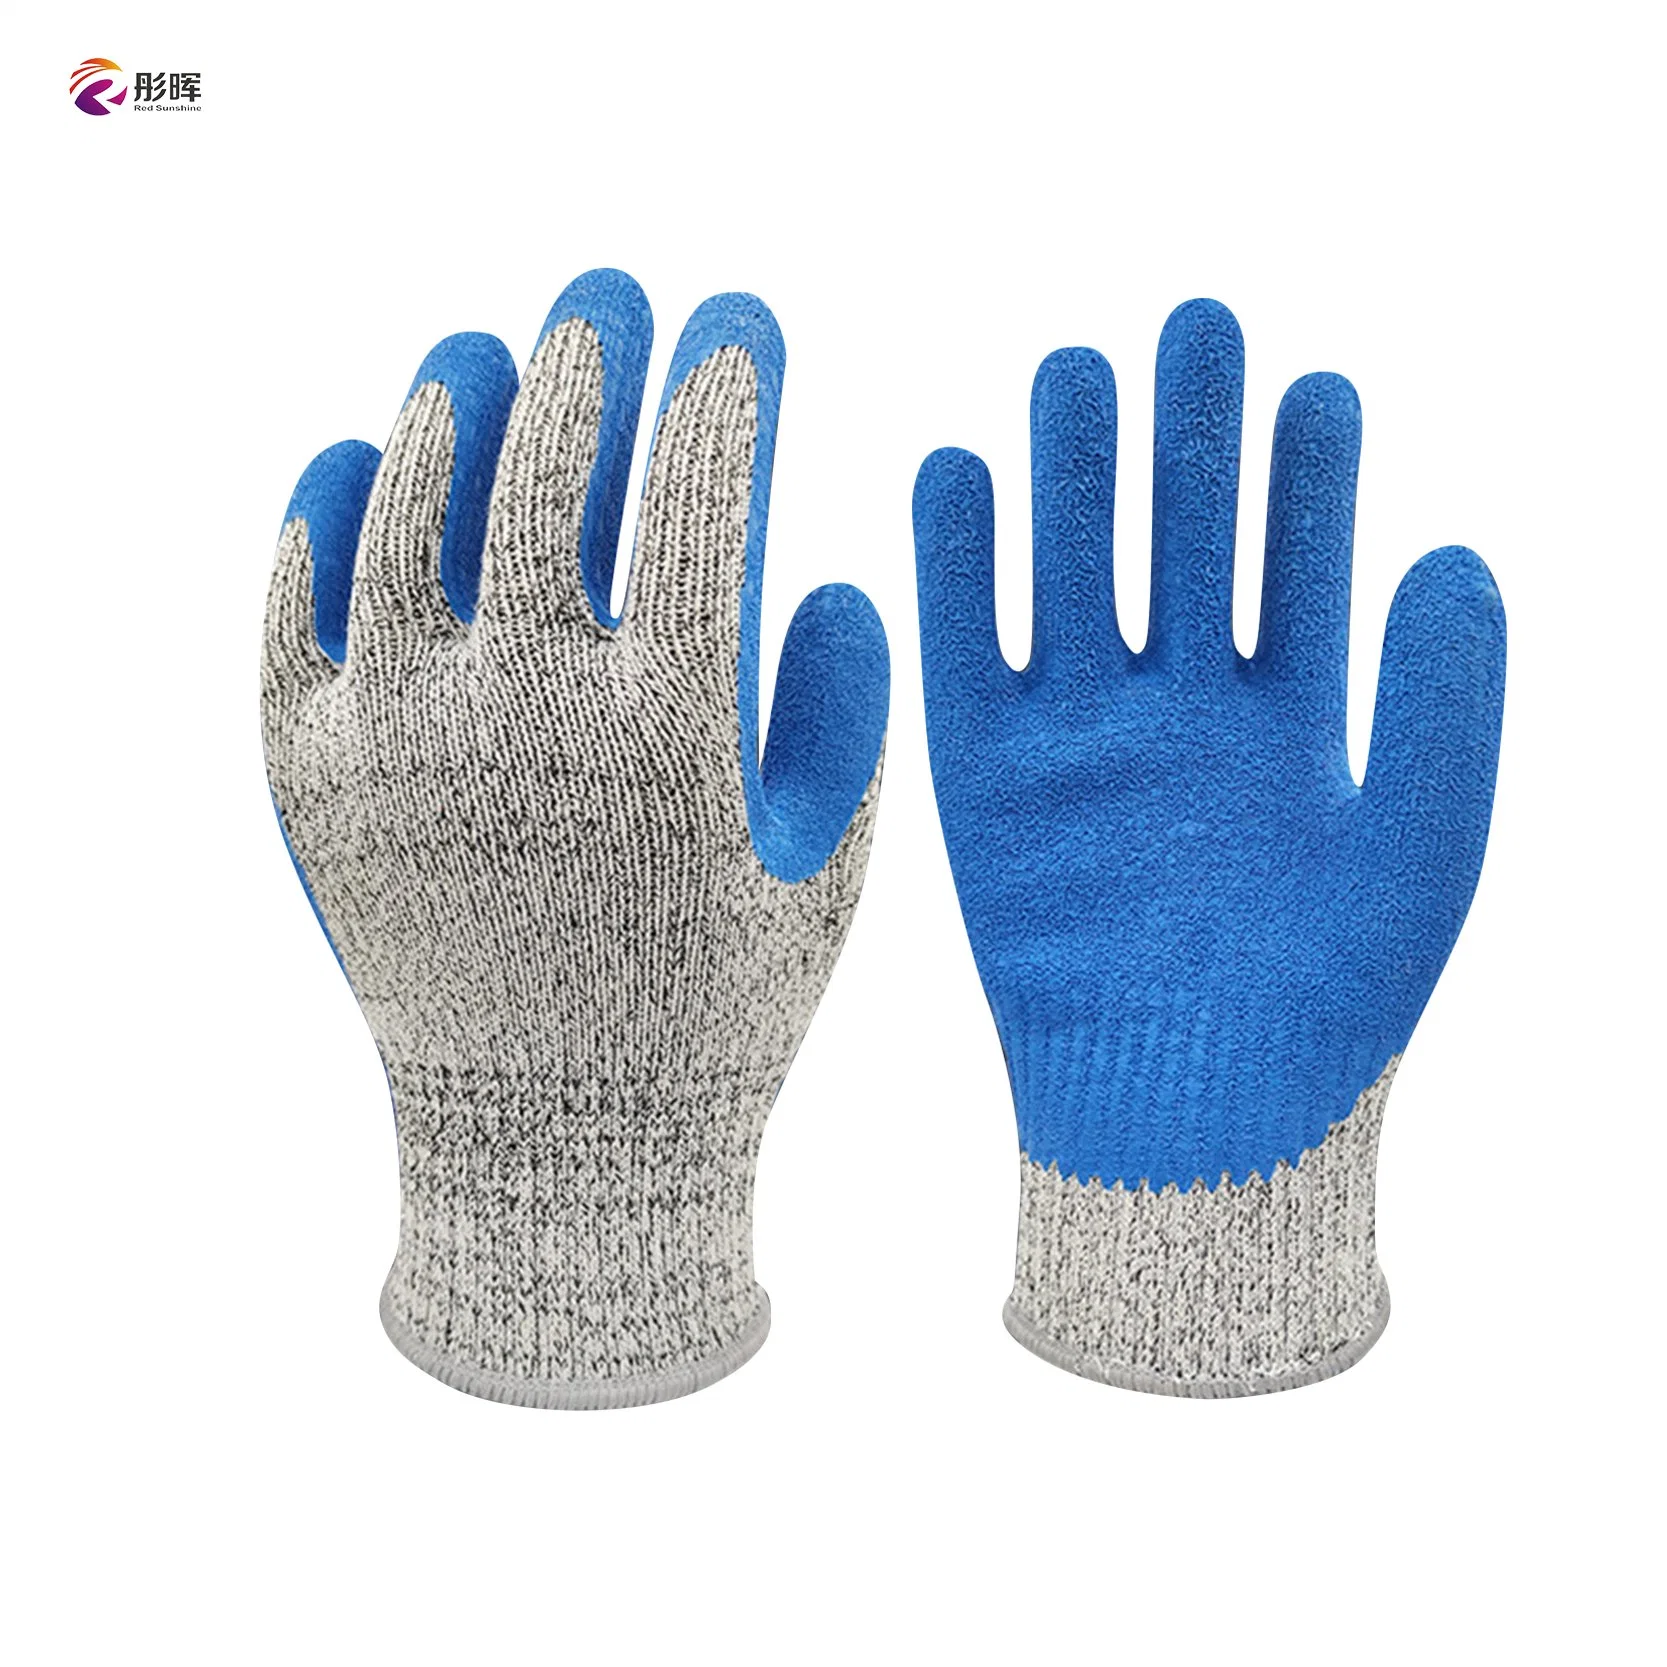 China Großhandel/Lieferant Bauarbeit Polyester Hppe Anti-Cut Handschuhe Grau Nylon Gestrickte Latexhandschuhe Mit Knittermuster